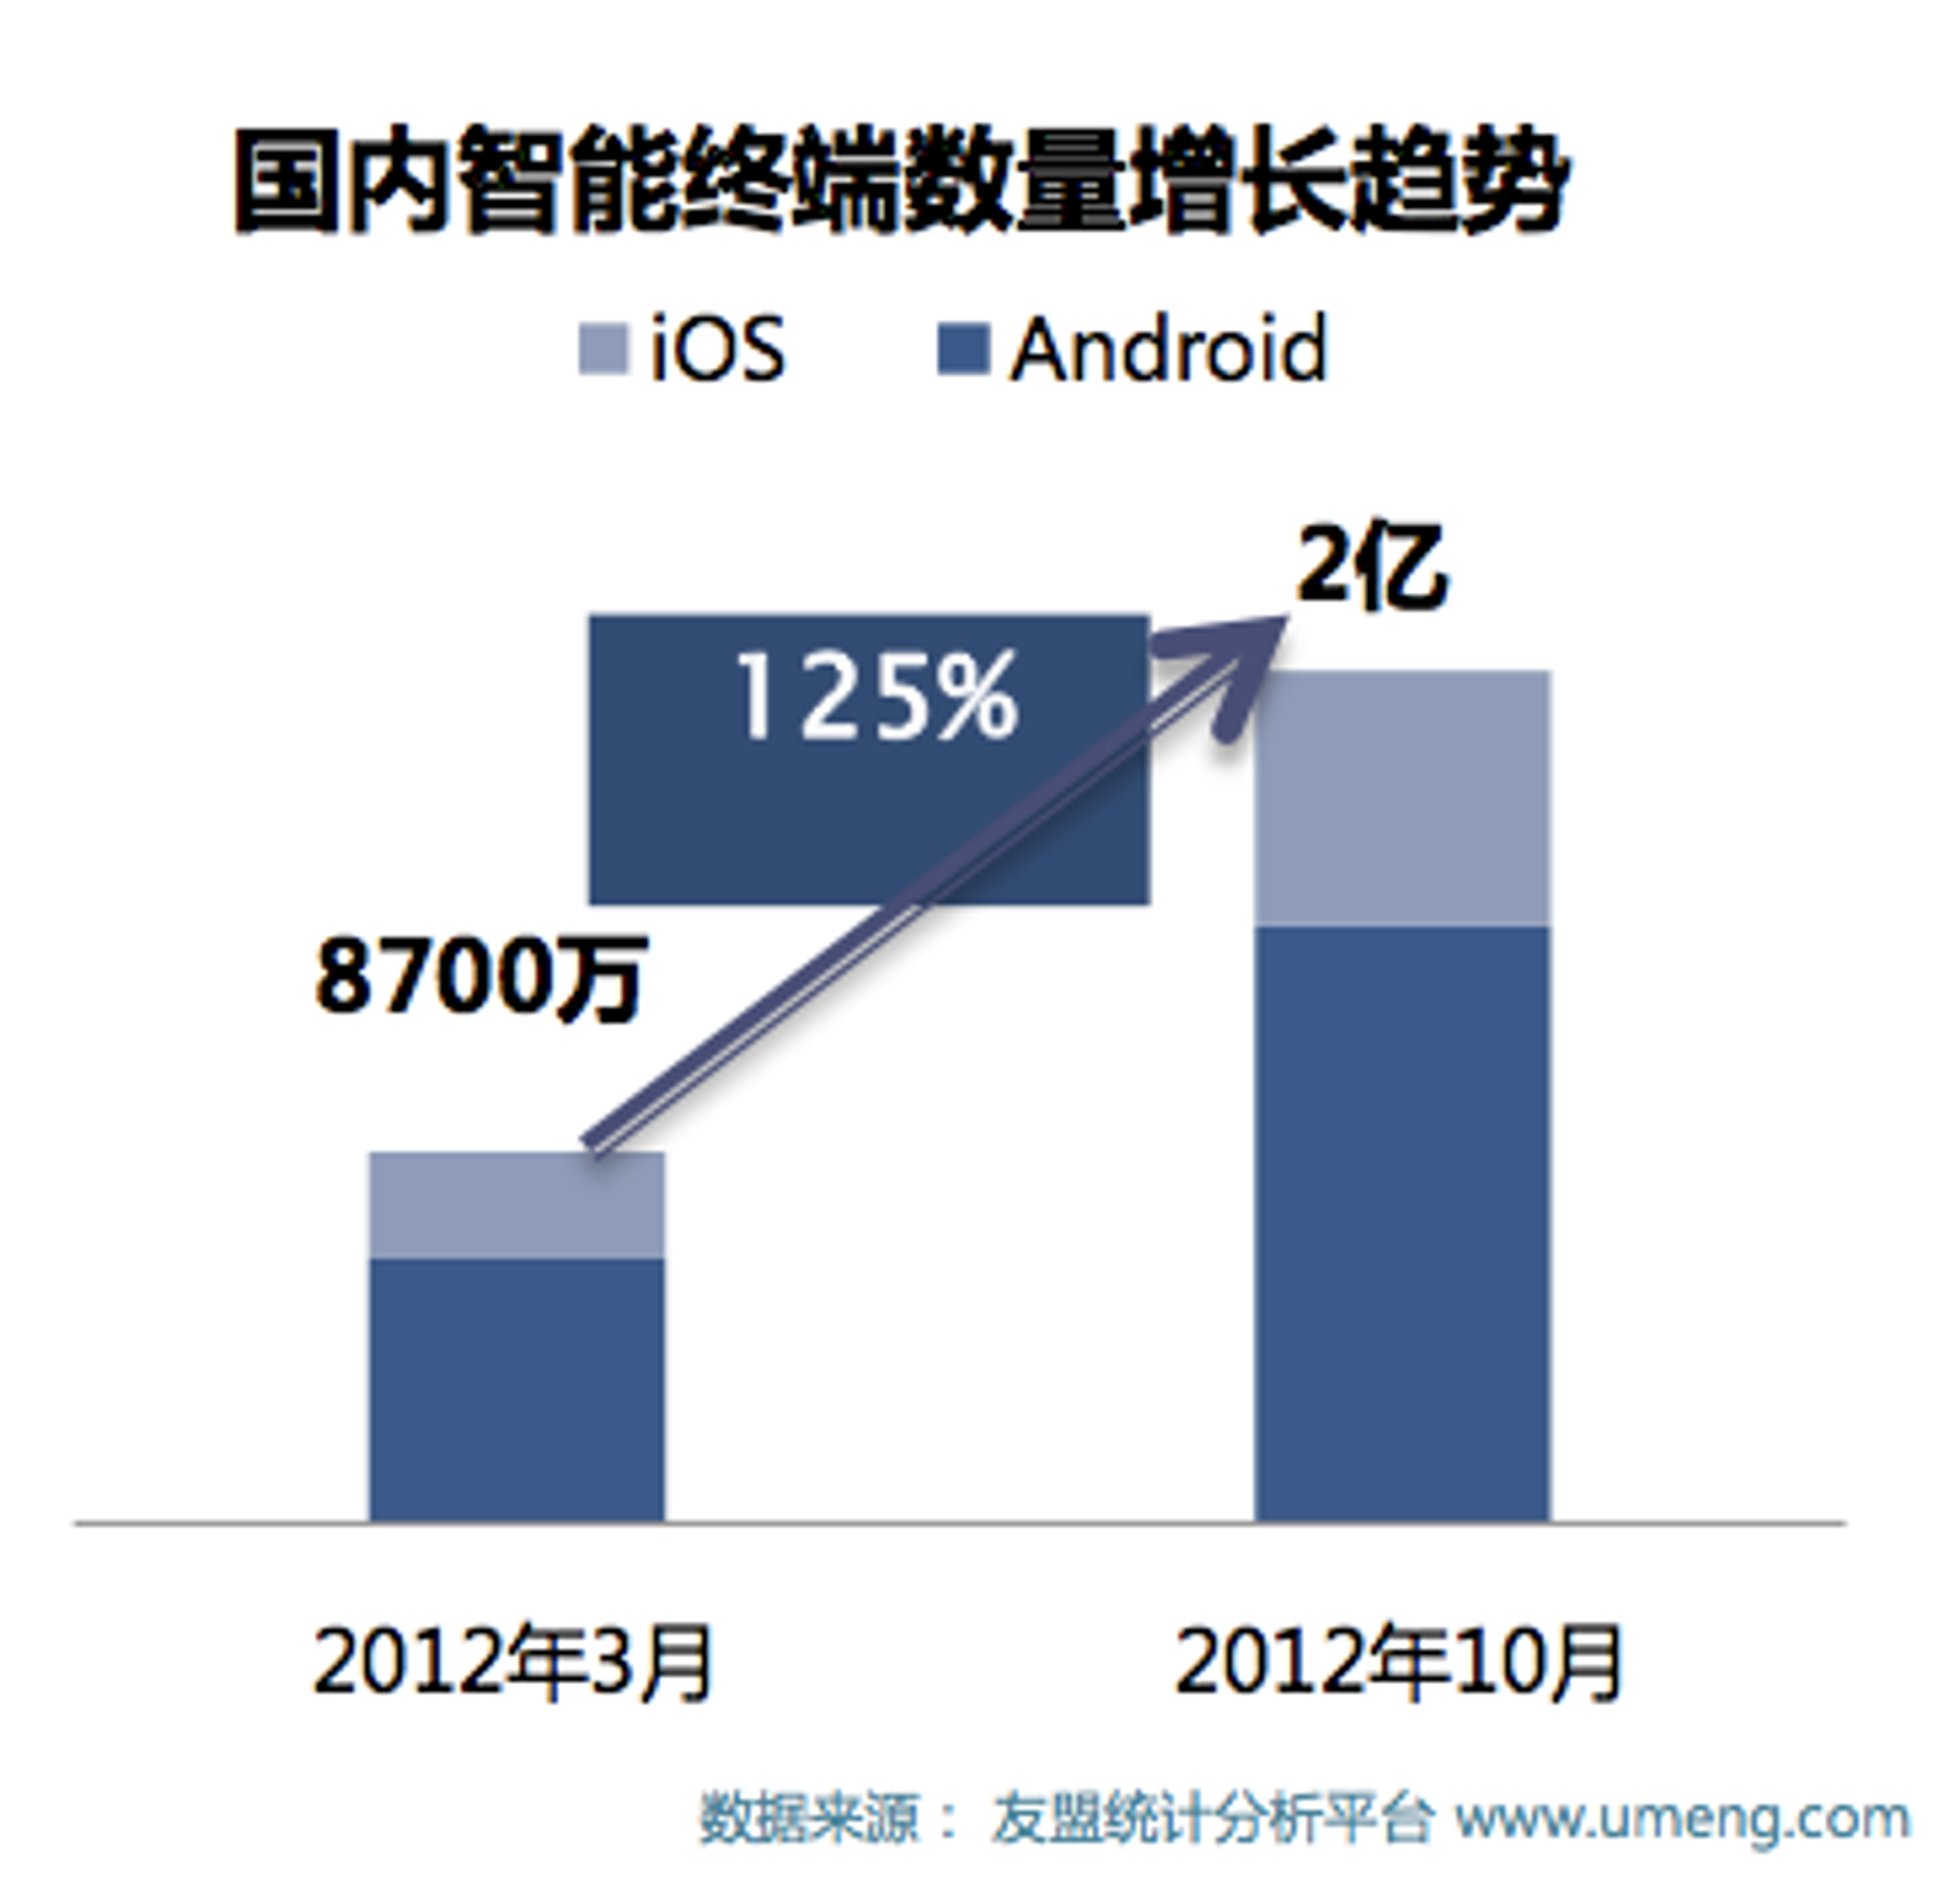 Ifølge Umeng hadde iOS og Android tilsammen 87 millioner brukere i Kina i første kvartal. I tredje kvartal er brukertallet økt til 200 millioner.